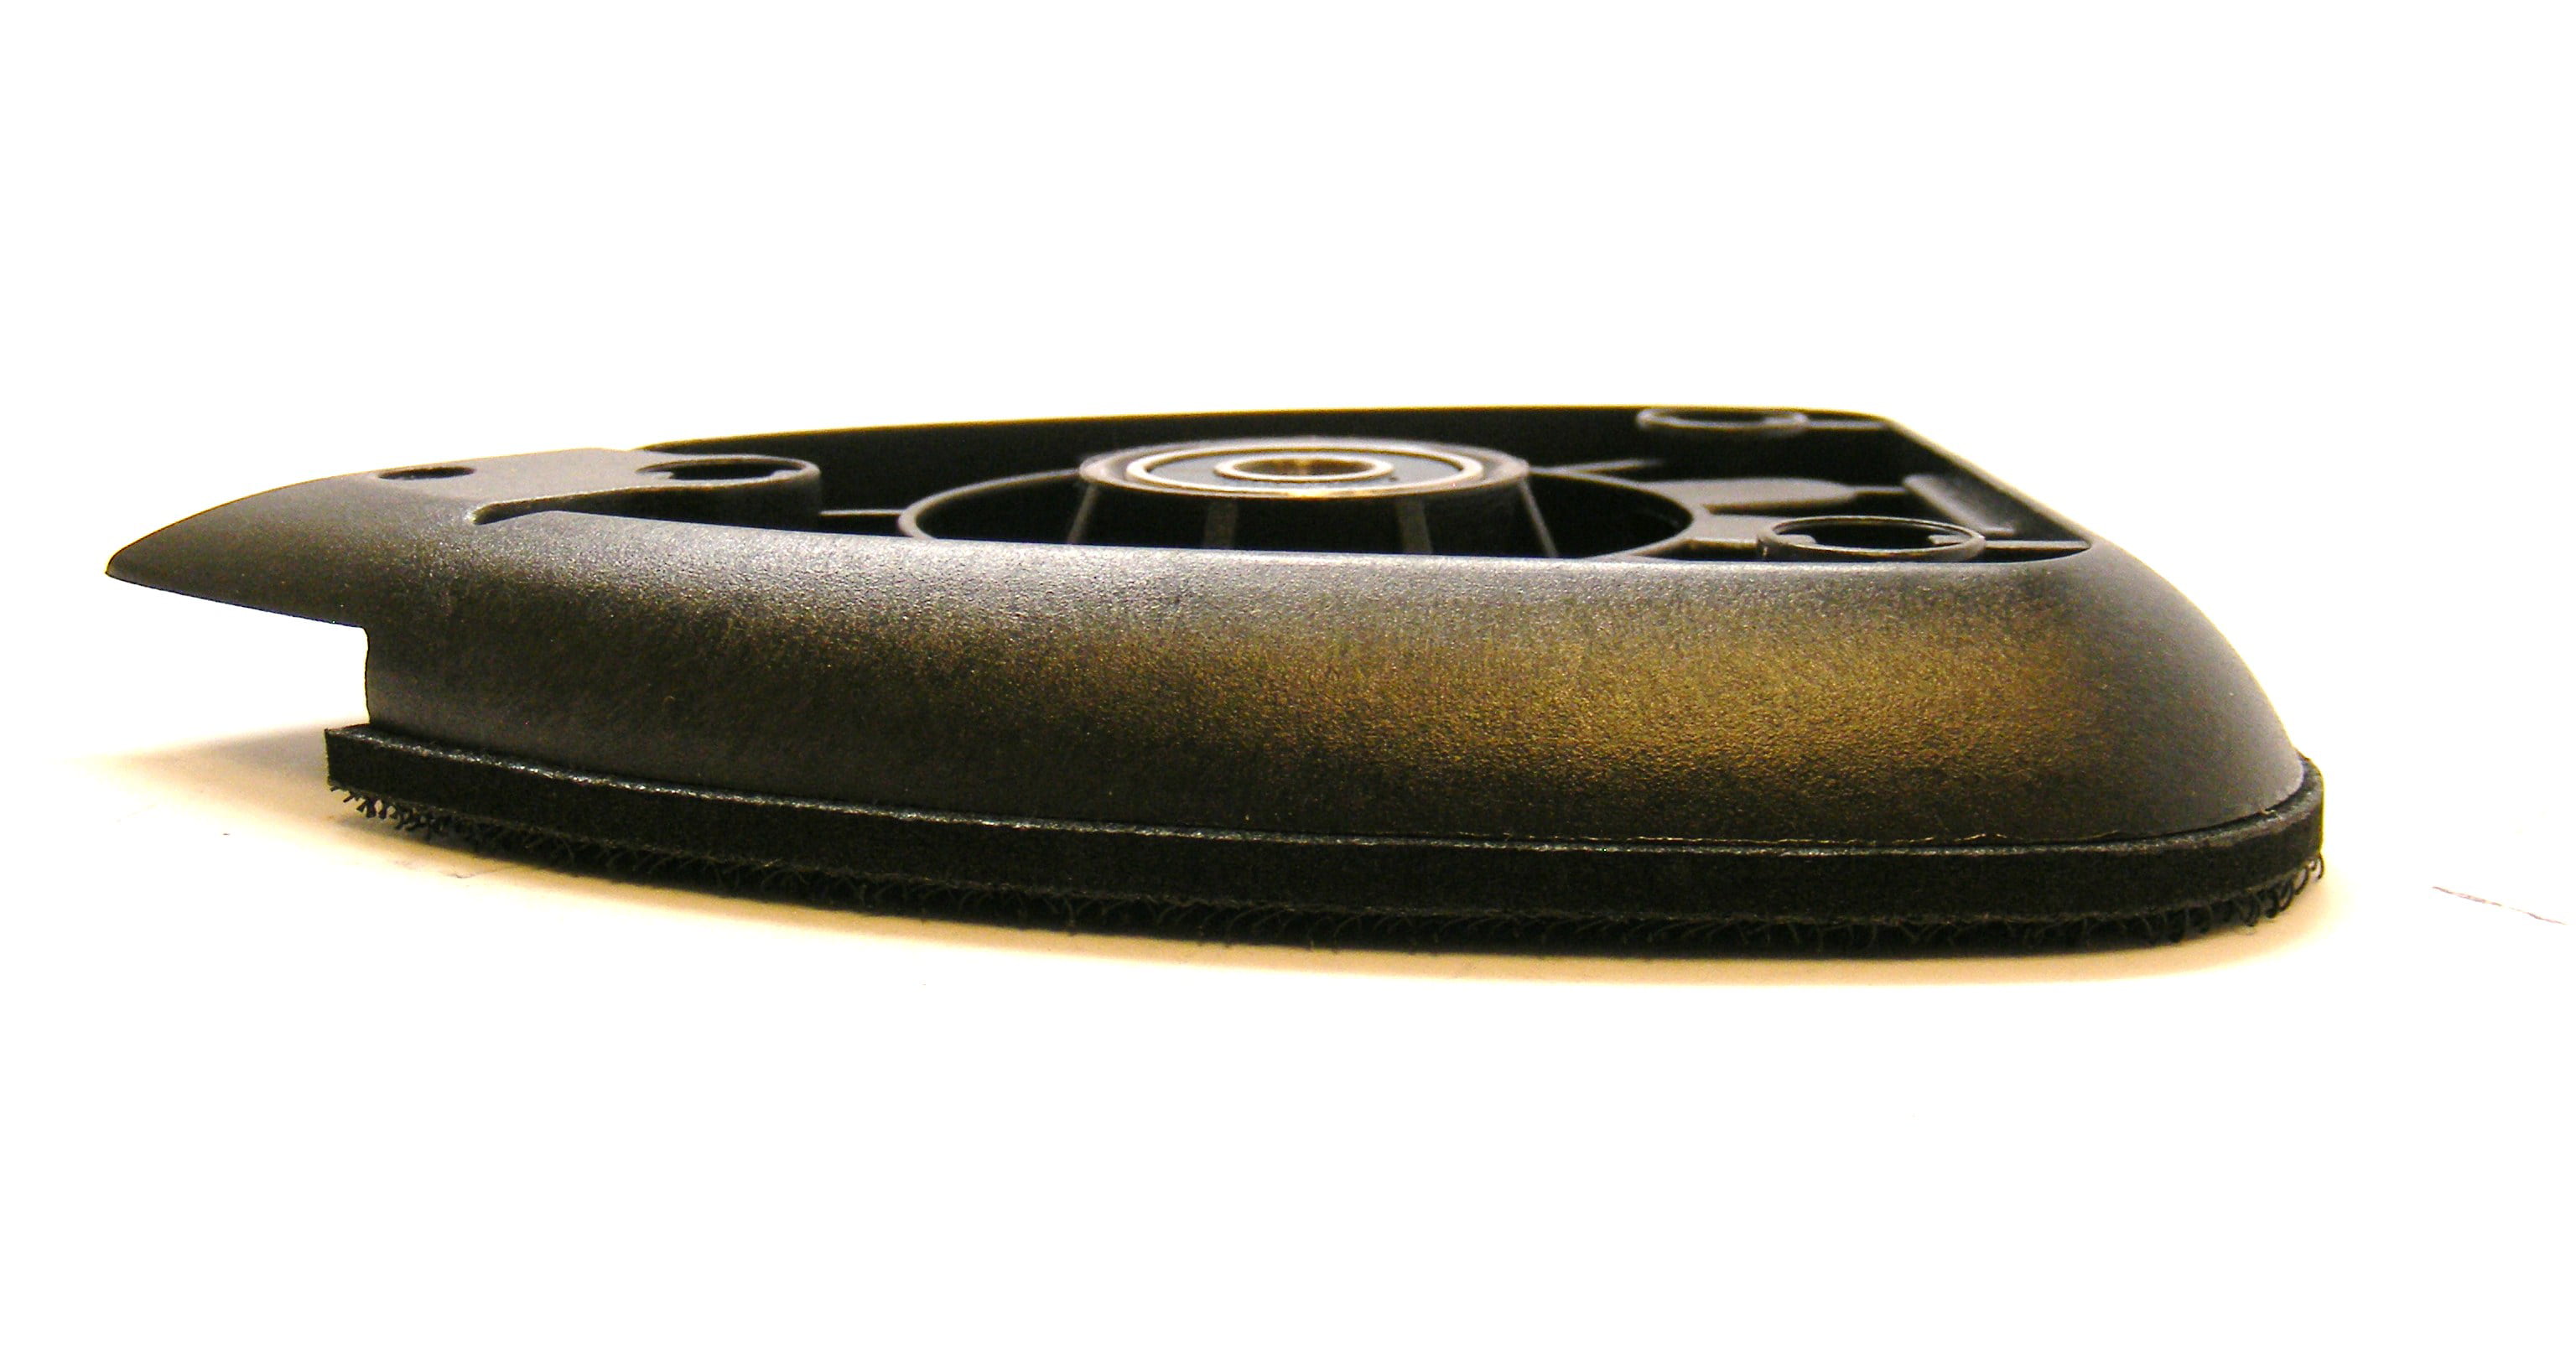 Black & Decker Micro Mouse Sander, MS800B